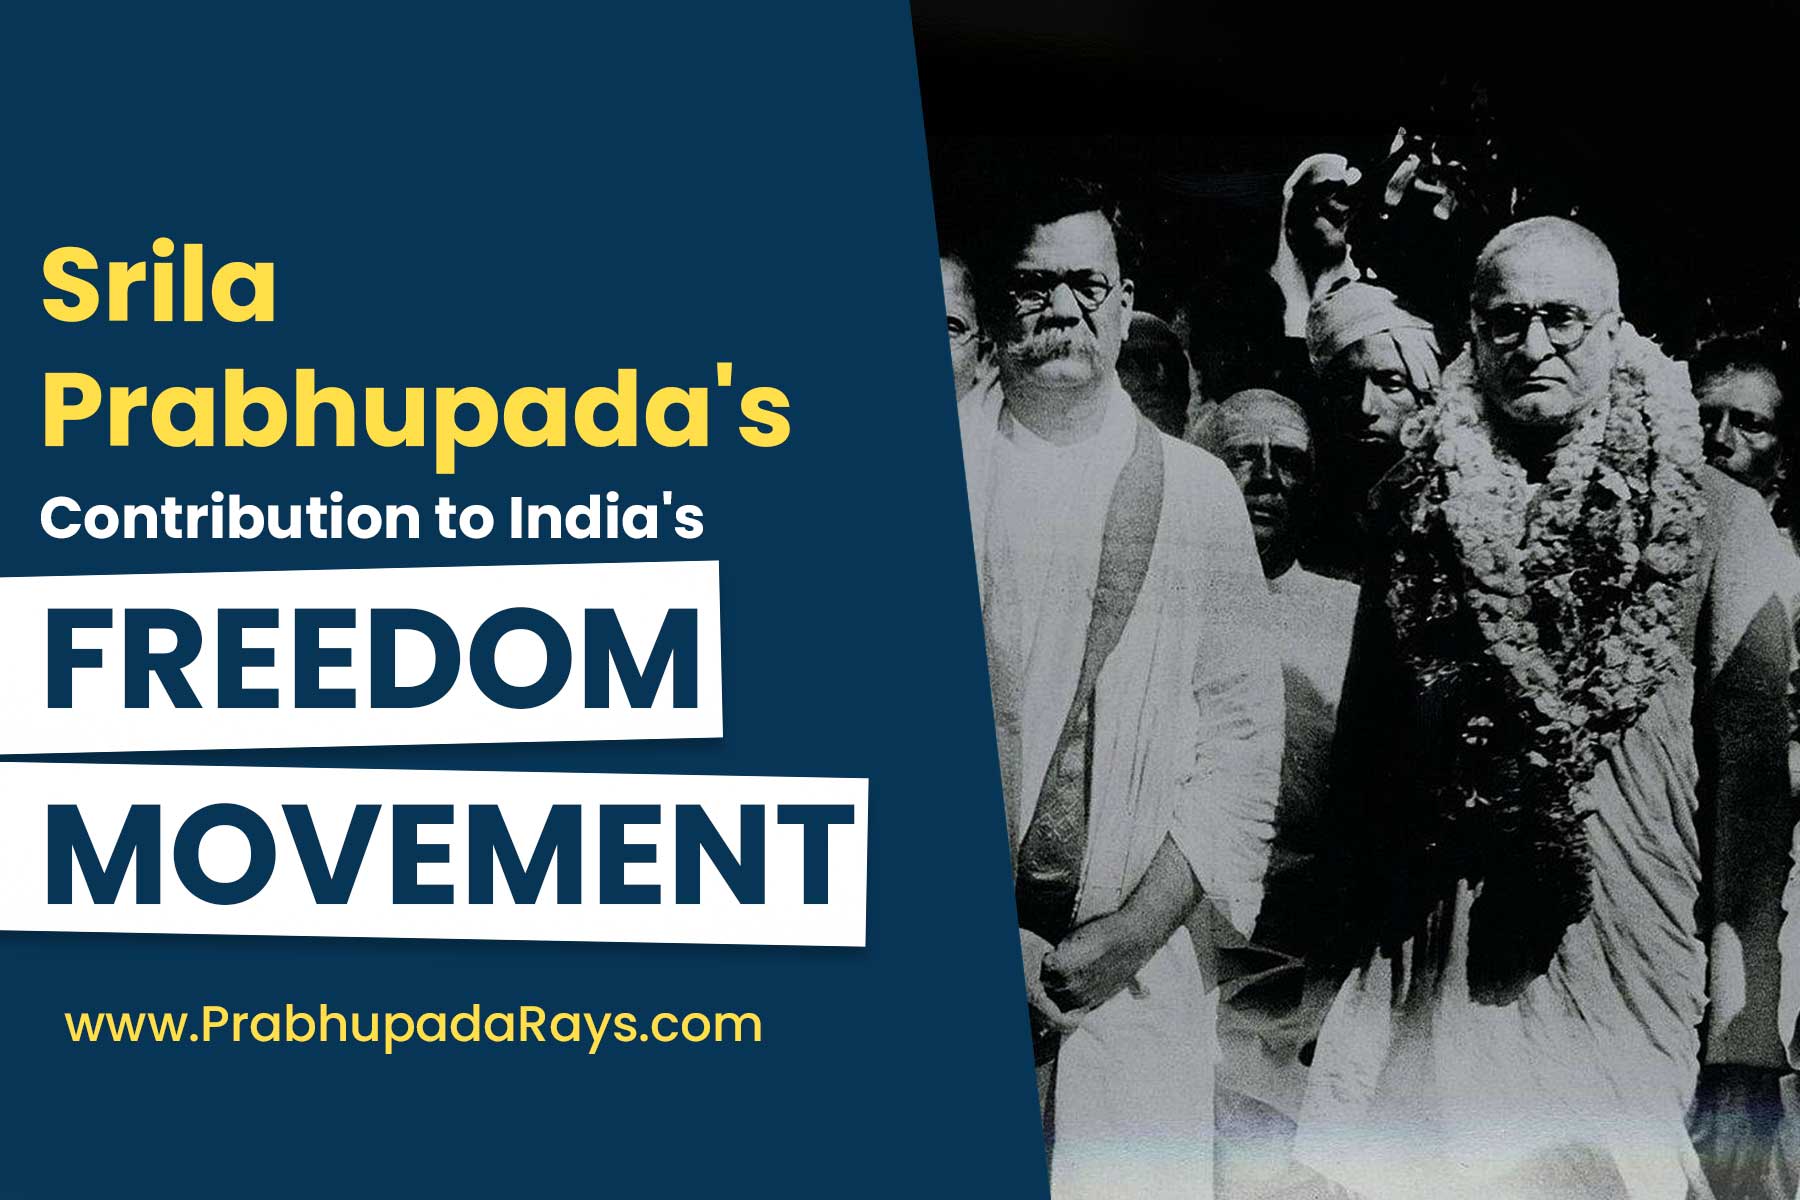 Srila Prabhupada's contribution to India's freedom movement